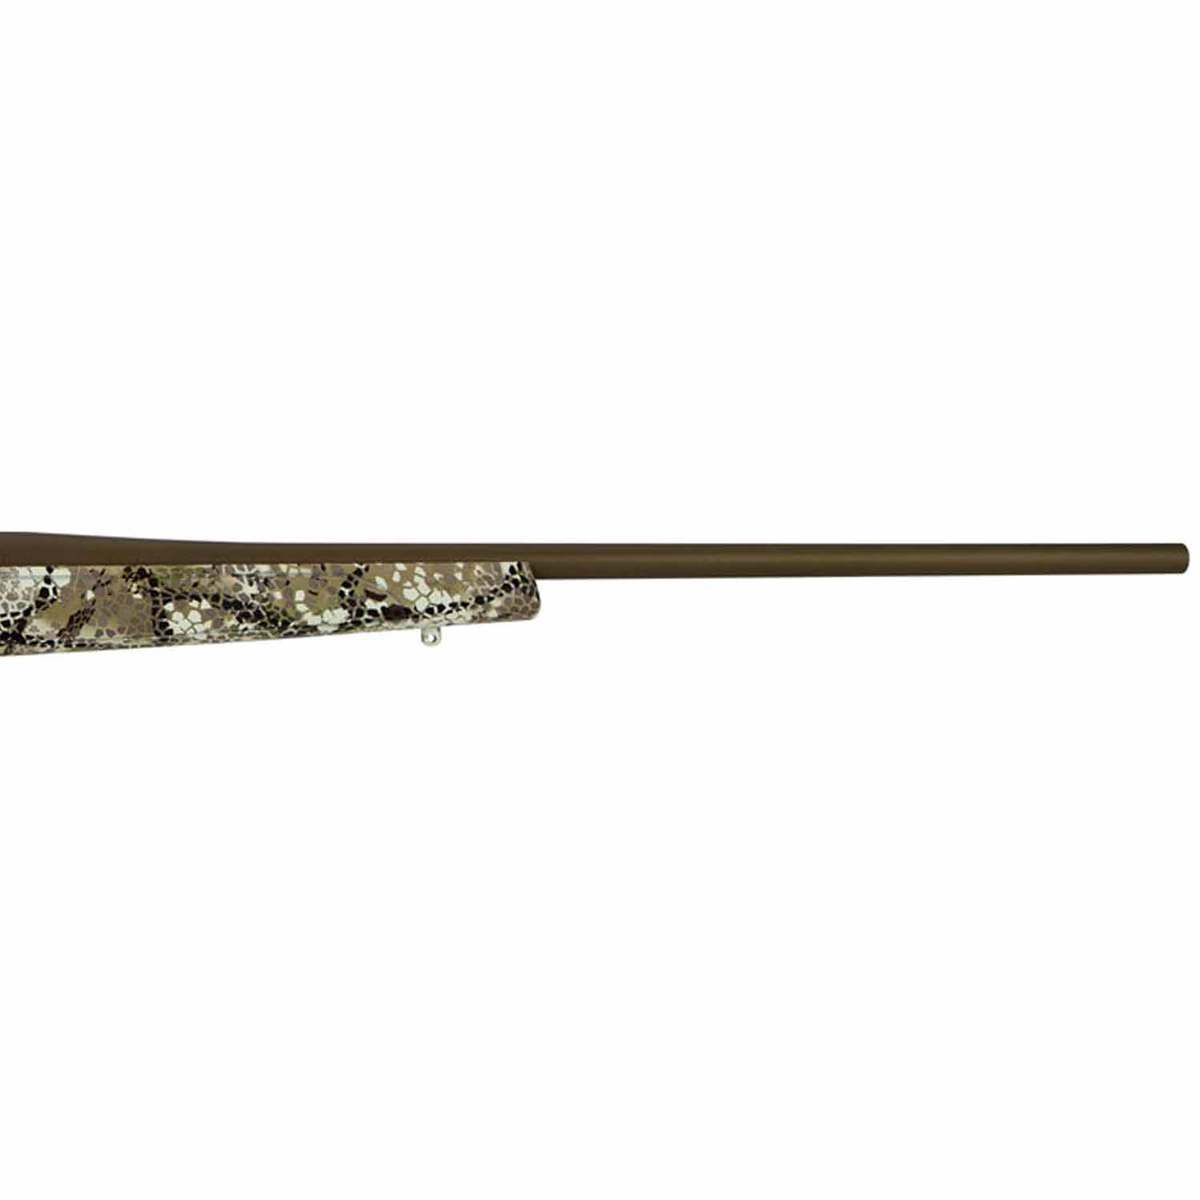 Weatherby Vanguard Badlands Burn Bronzecamo Bolt Action Rifle 7mm 08 Remington Sportsmans 